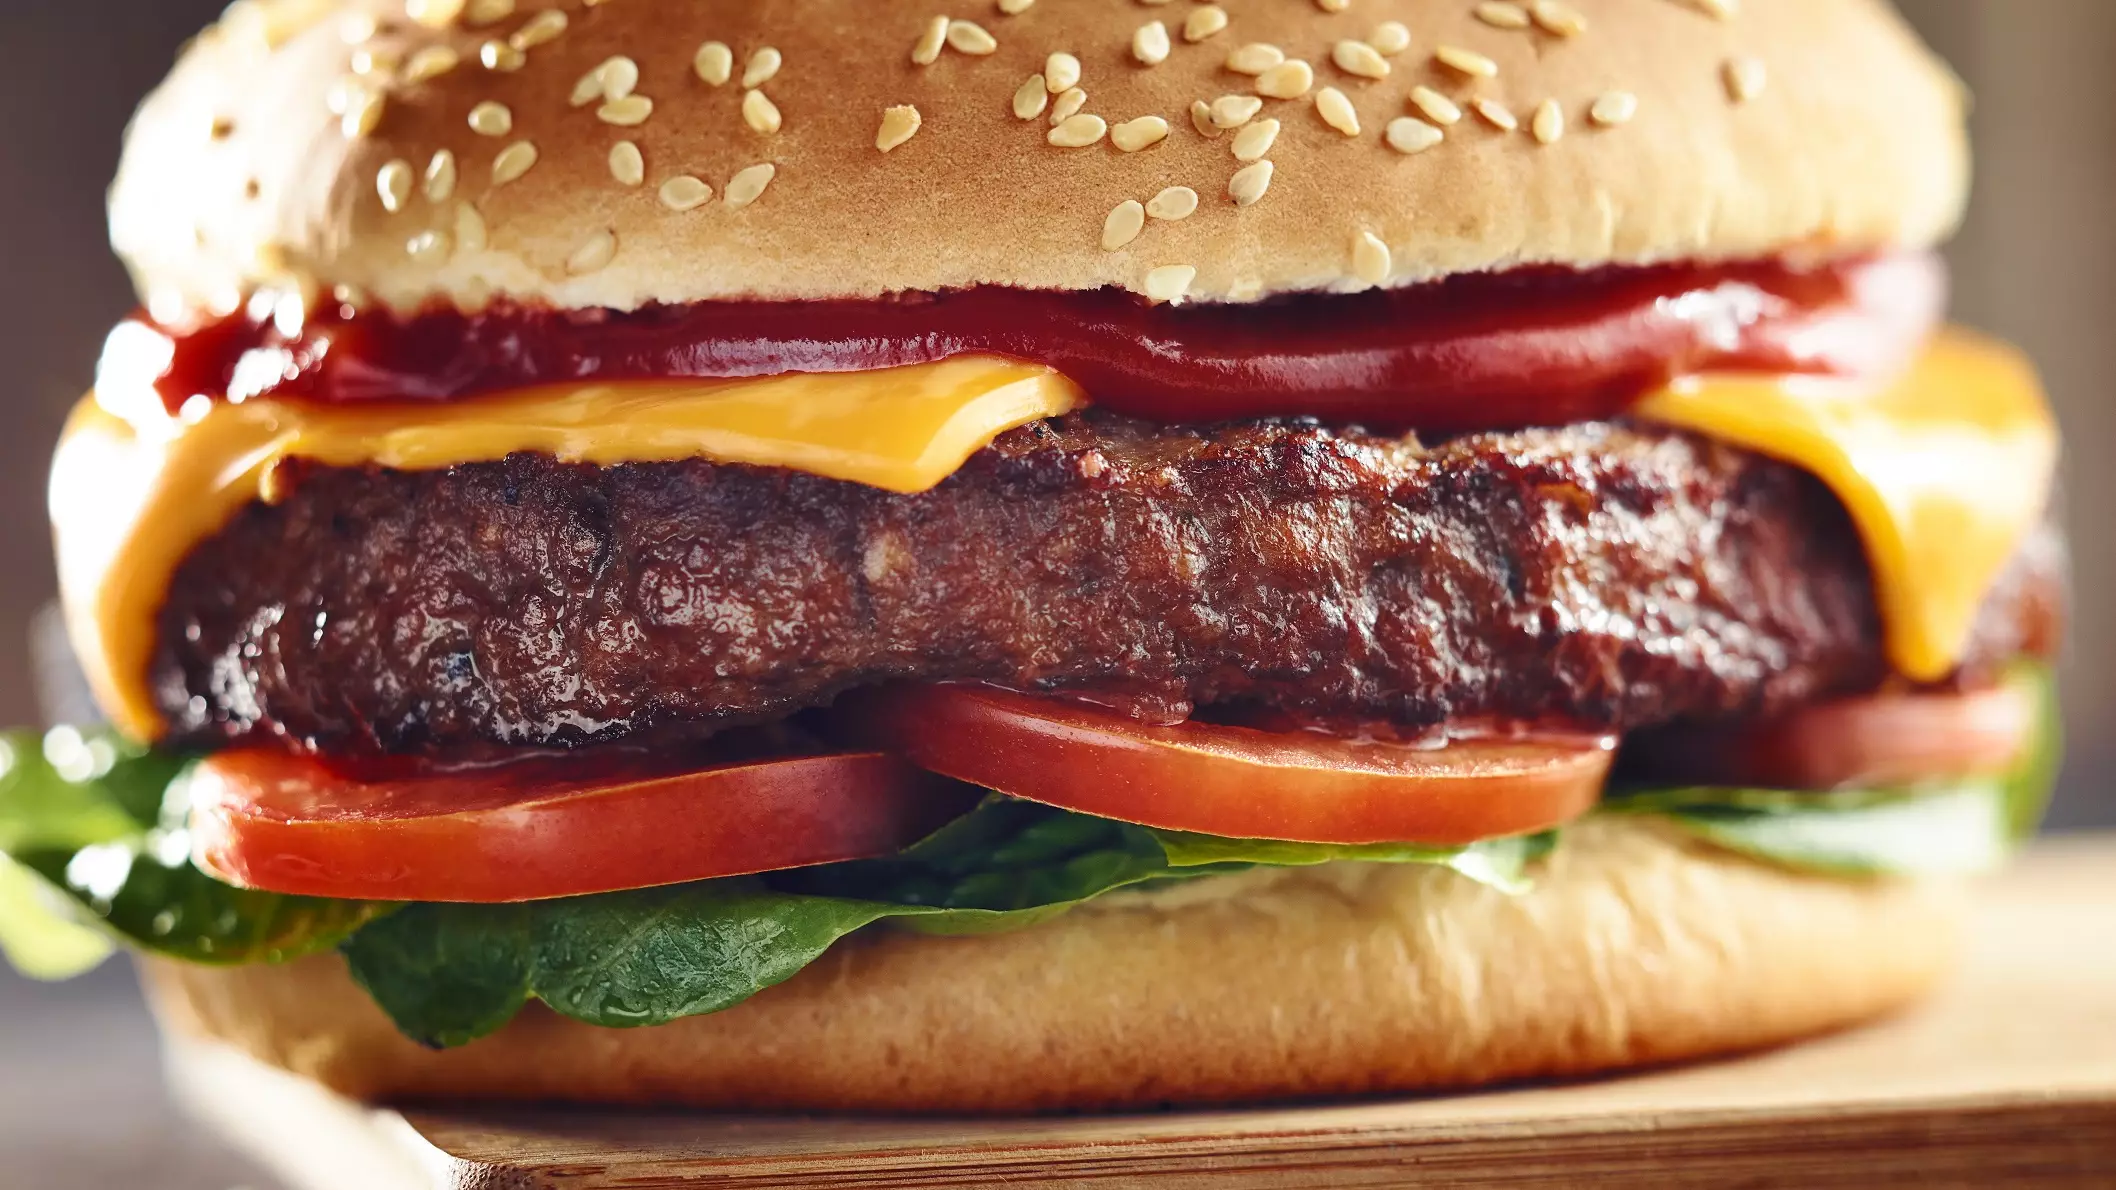 Iceland Launches The First Supermarket Half Pound Aberdeen Angus Beef Burger 